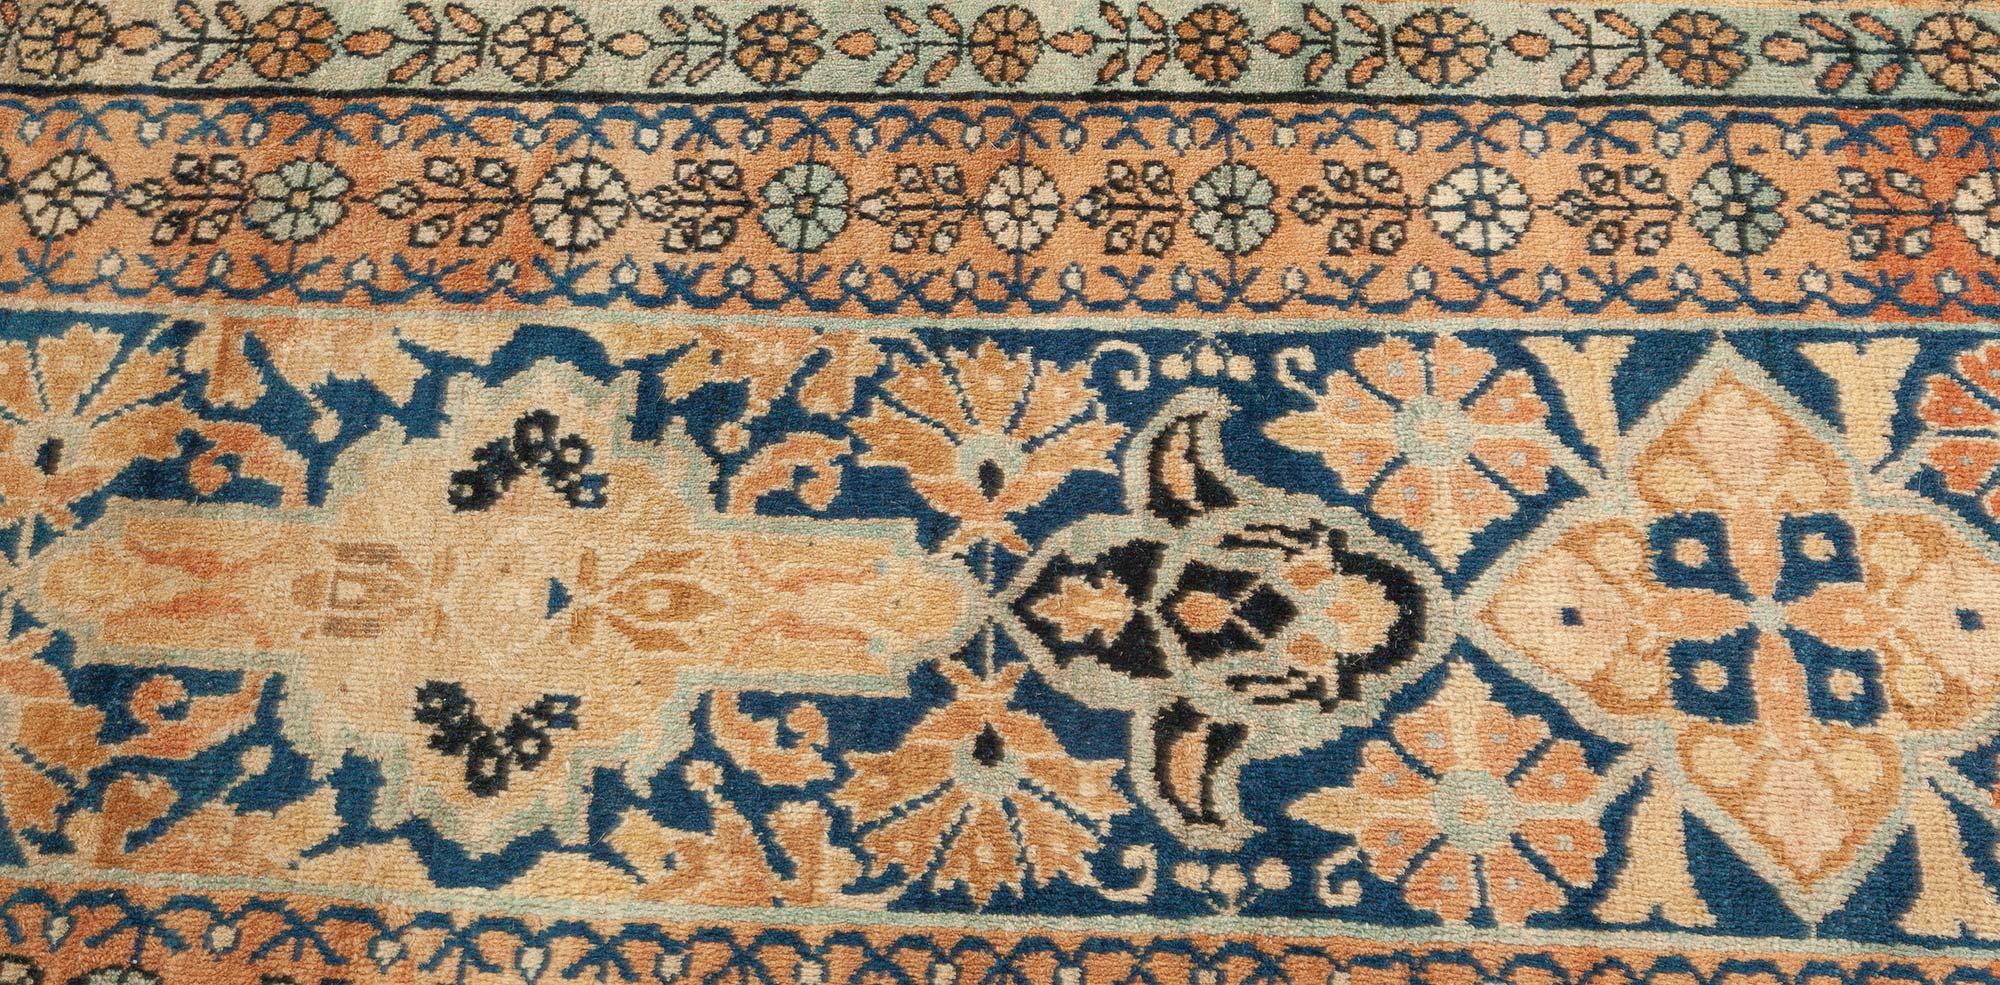 Authentic Persian Kirman Handmade Wool Carpet
Size: 11'7